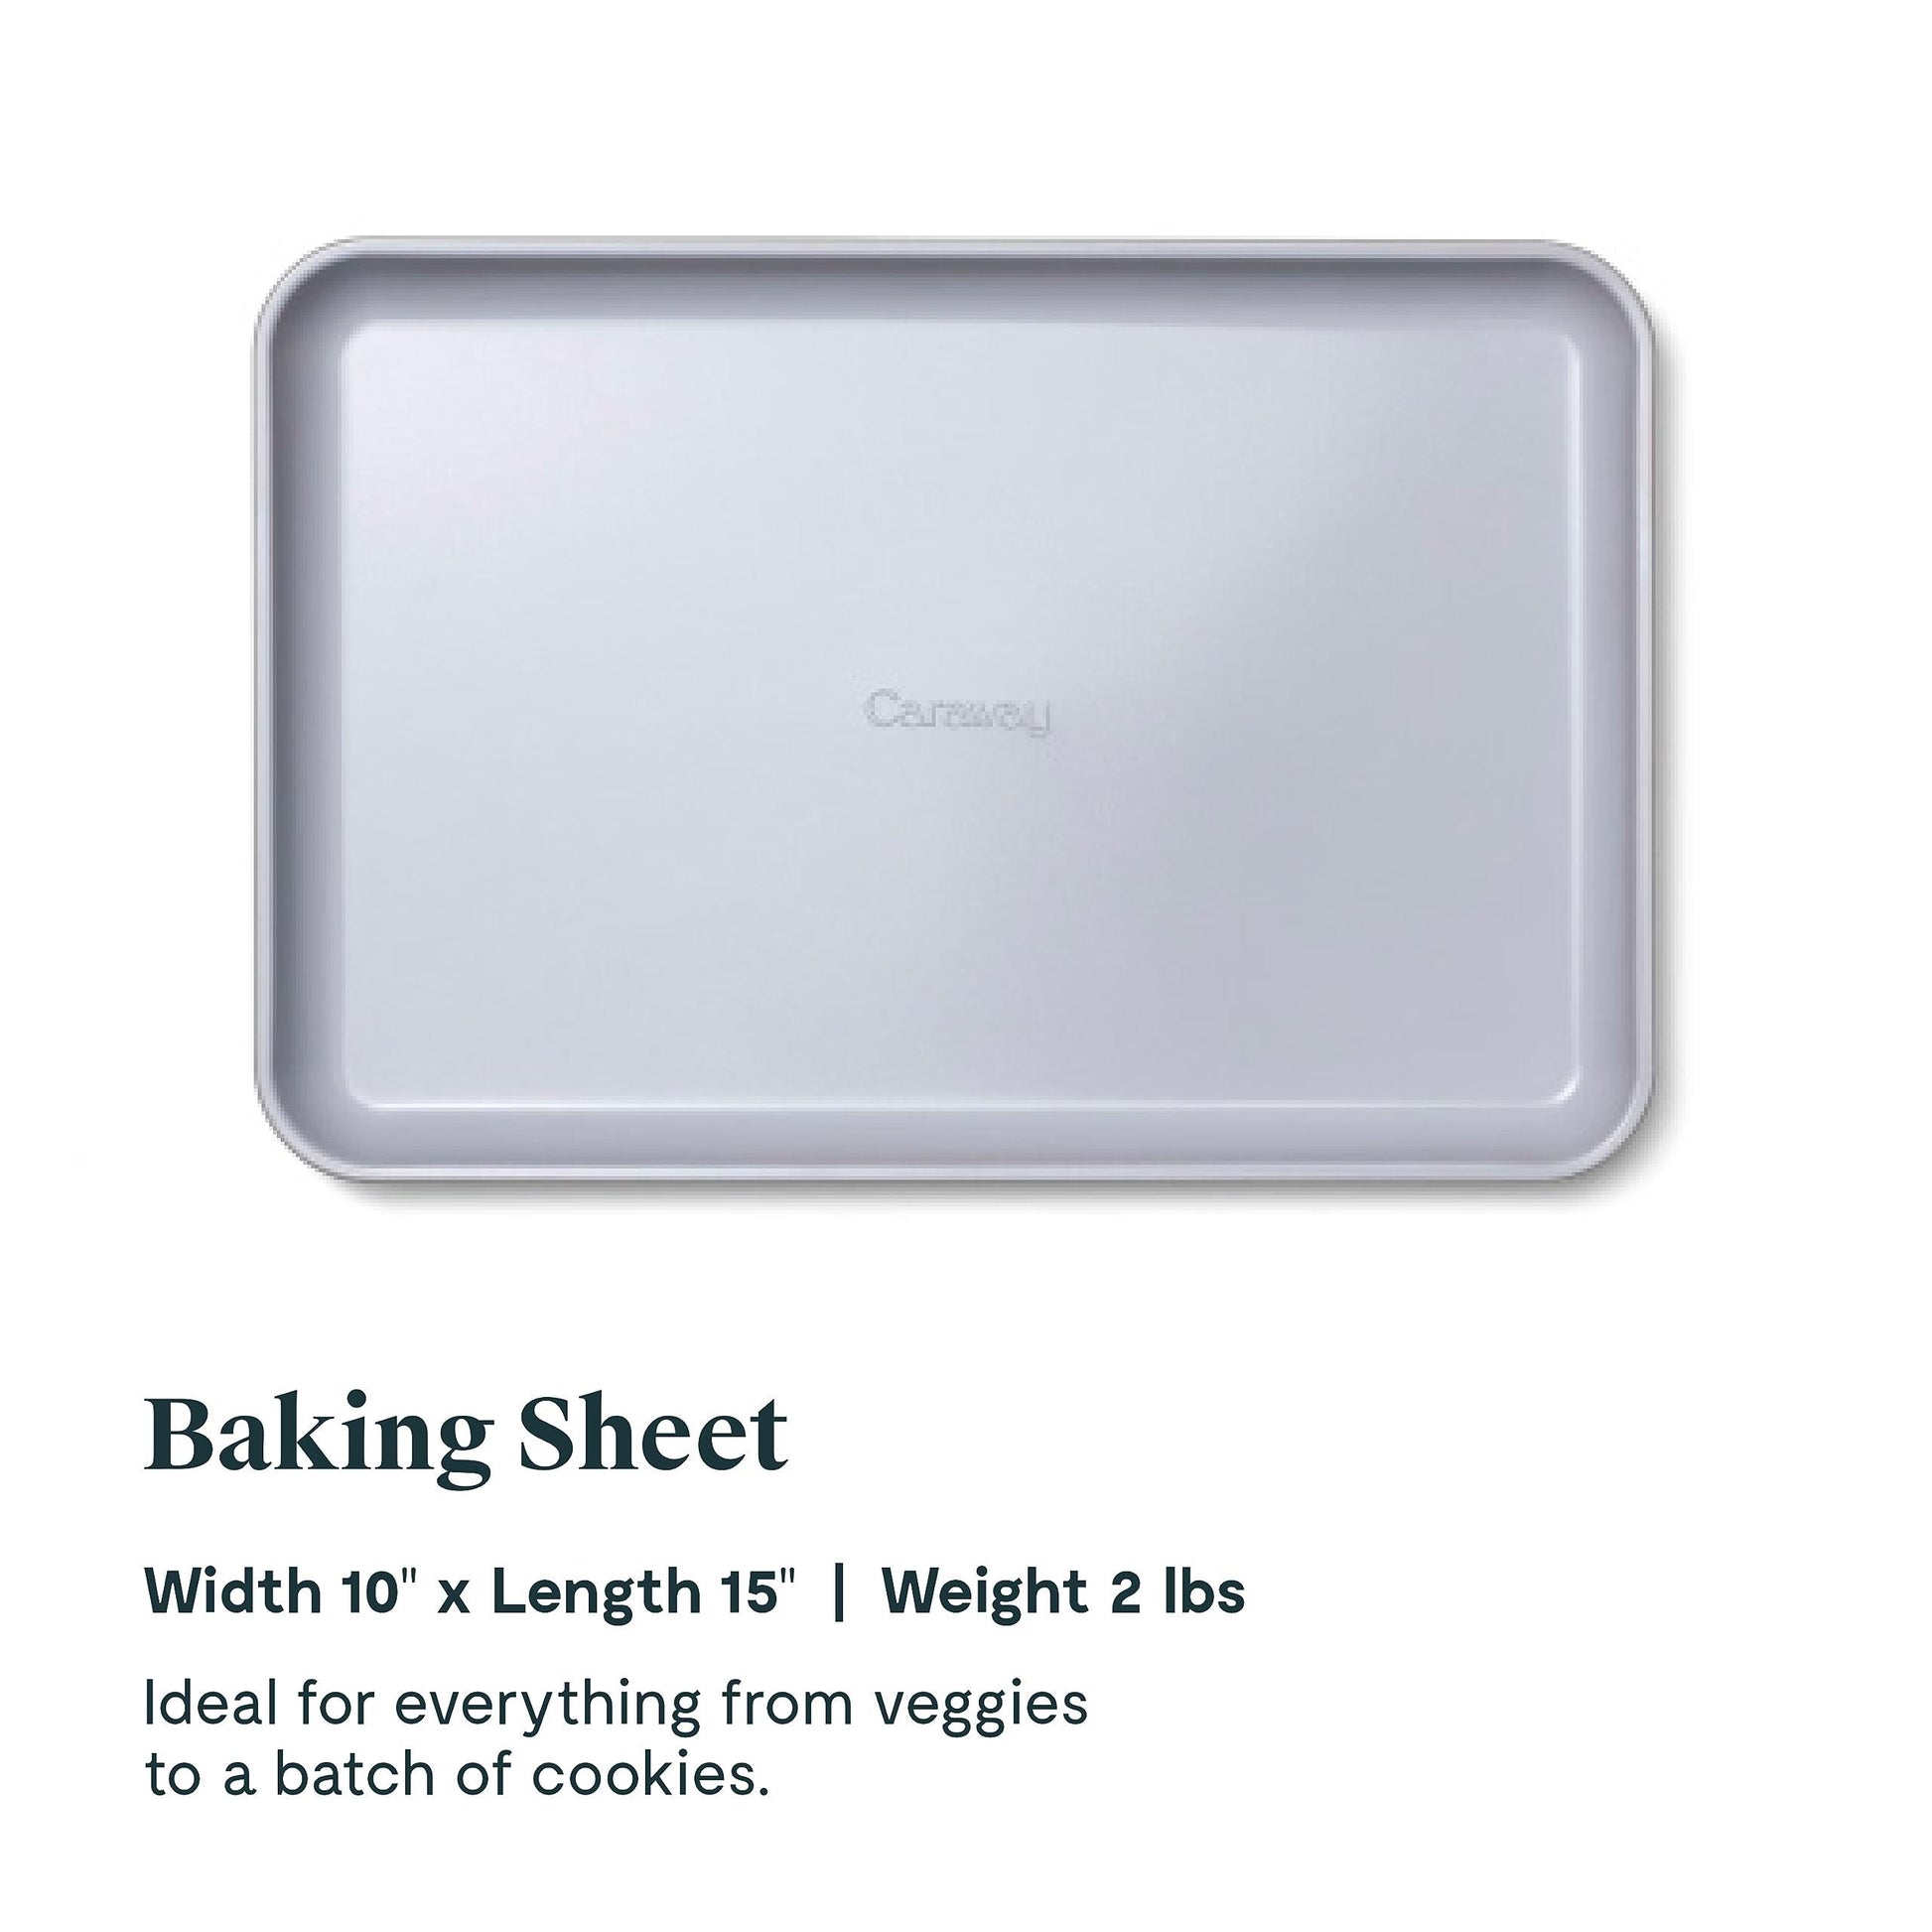 Caraway Non-Stick Ceramic Baking Sheet - Naturally Slick Ceramic Coating - Non-Toxic, PTFE & PFOA Free - Perfect for Baking, Roasting, and More - Medium - Cream - CookCave